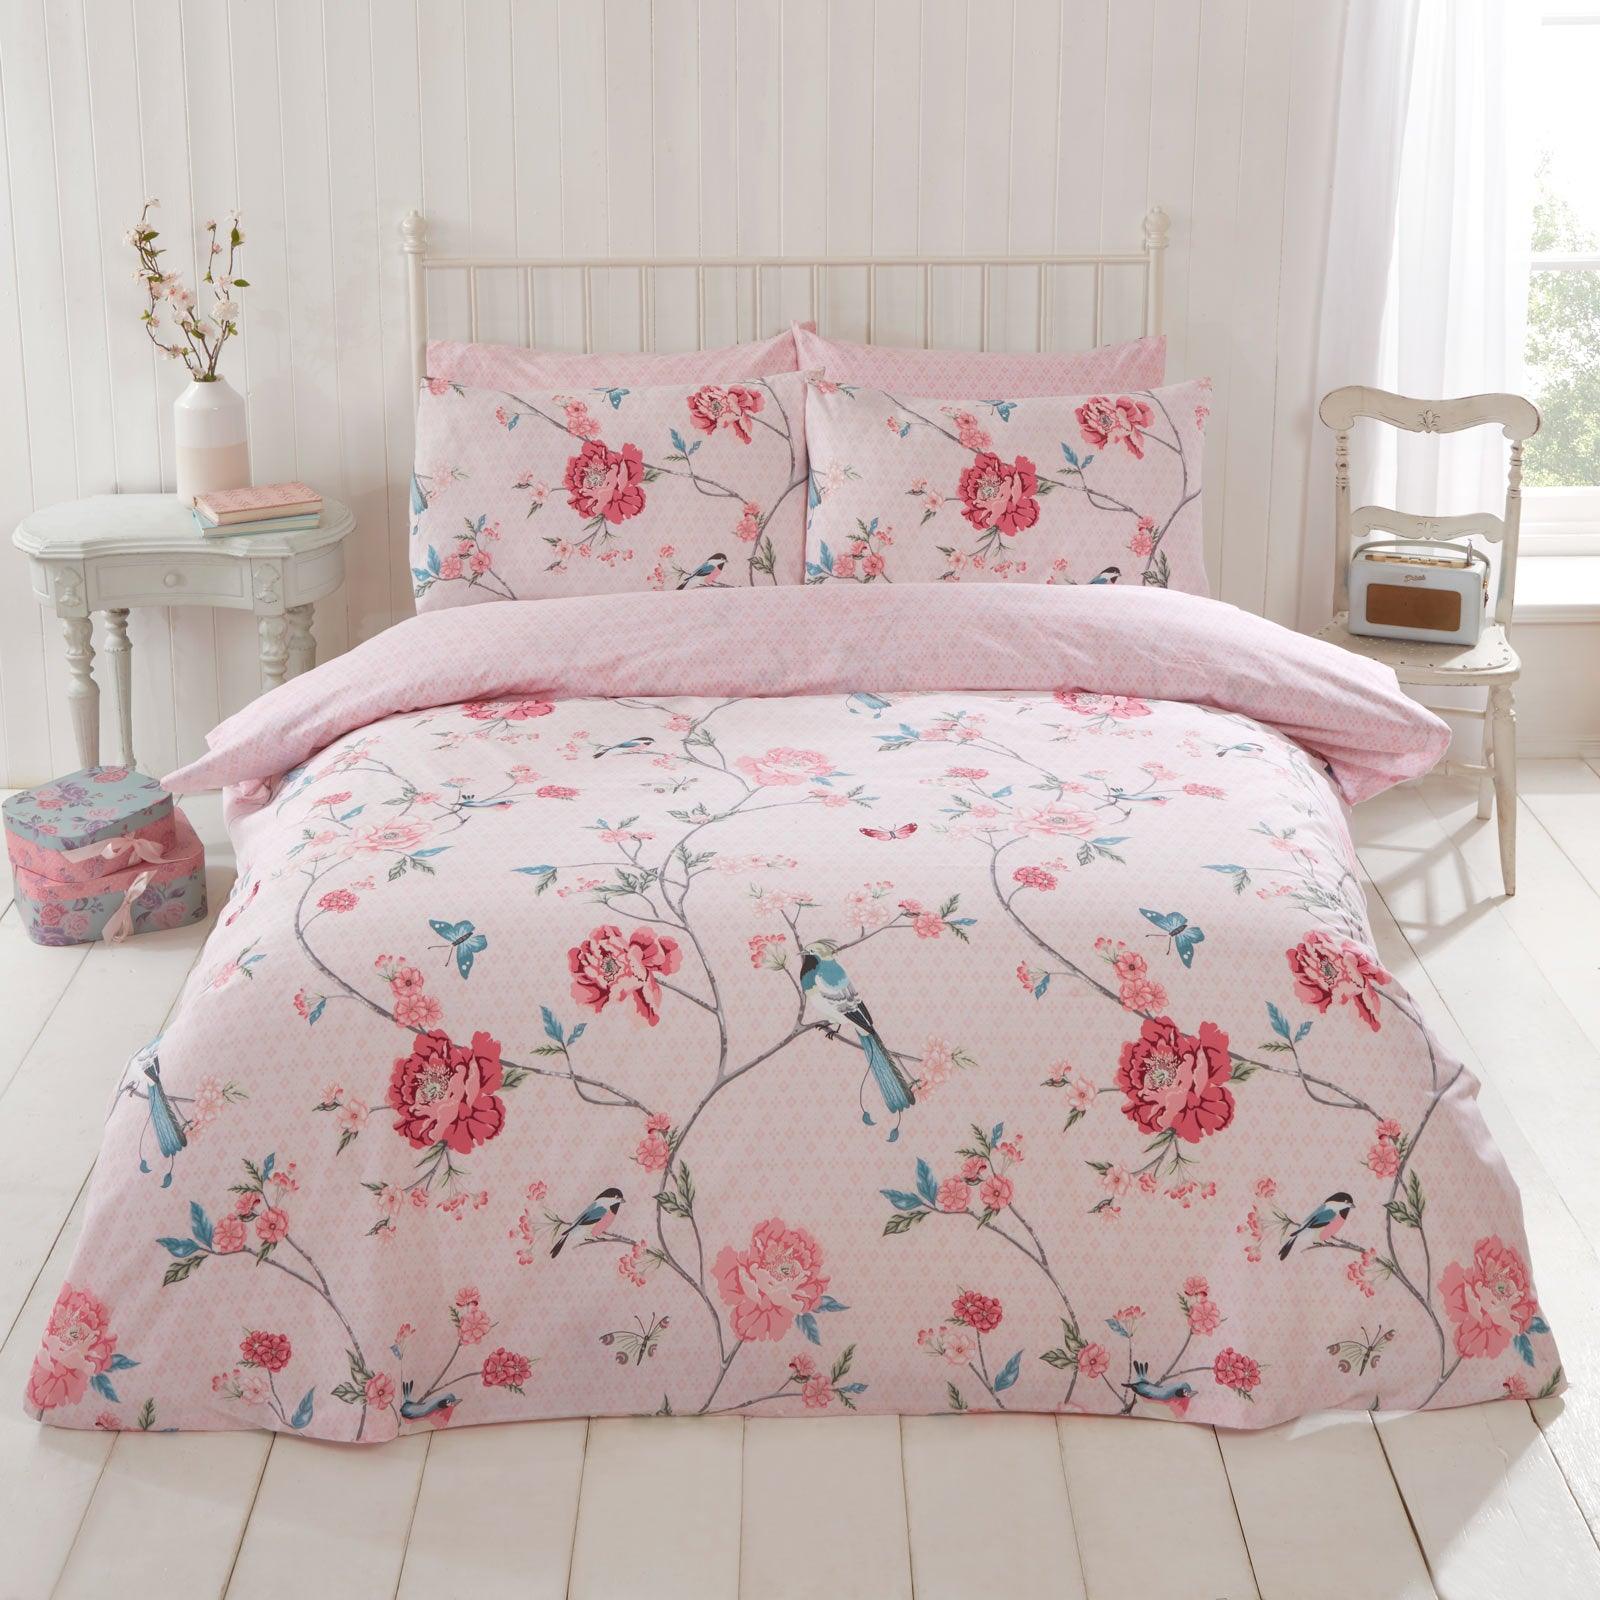 Tranquility Floral Birds Reversible Pink Duvet Cover Set – Ideal